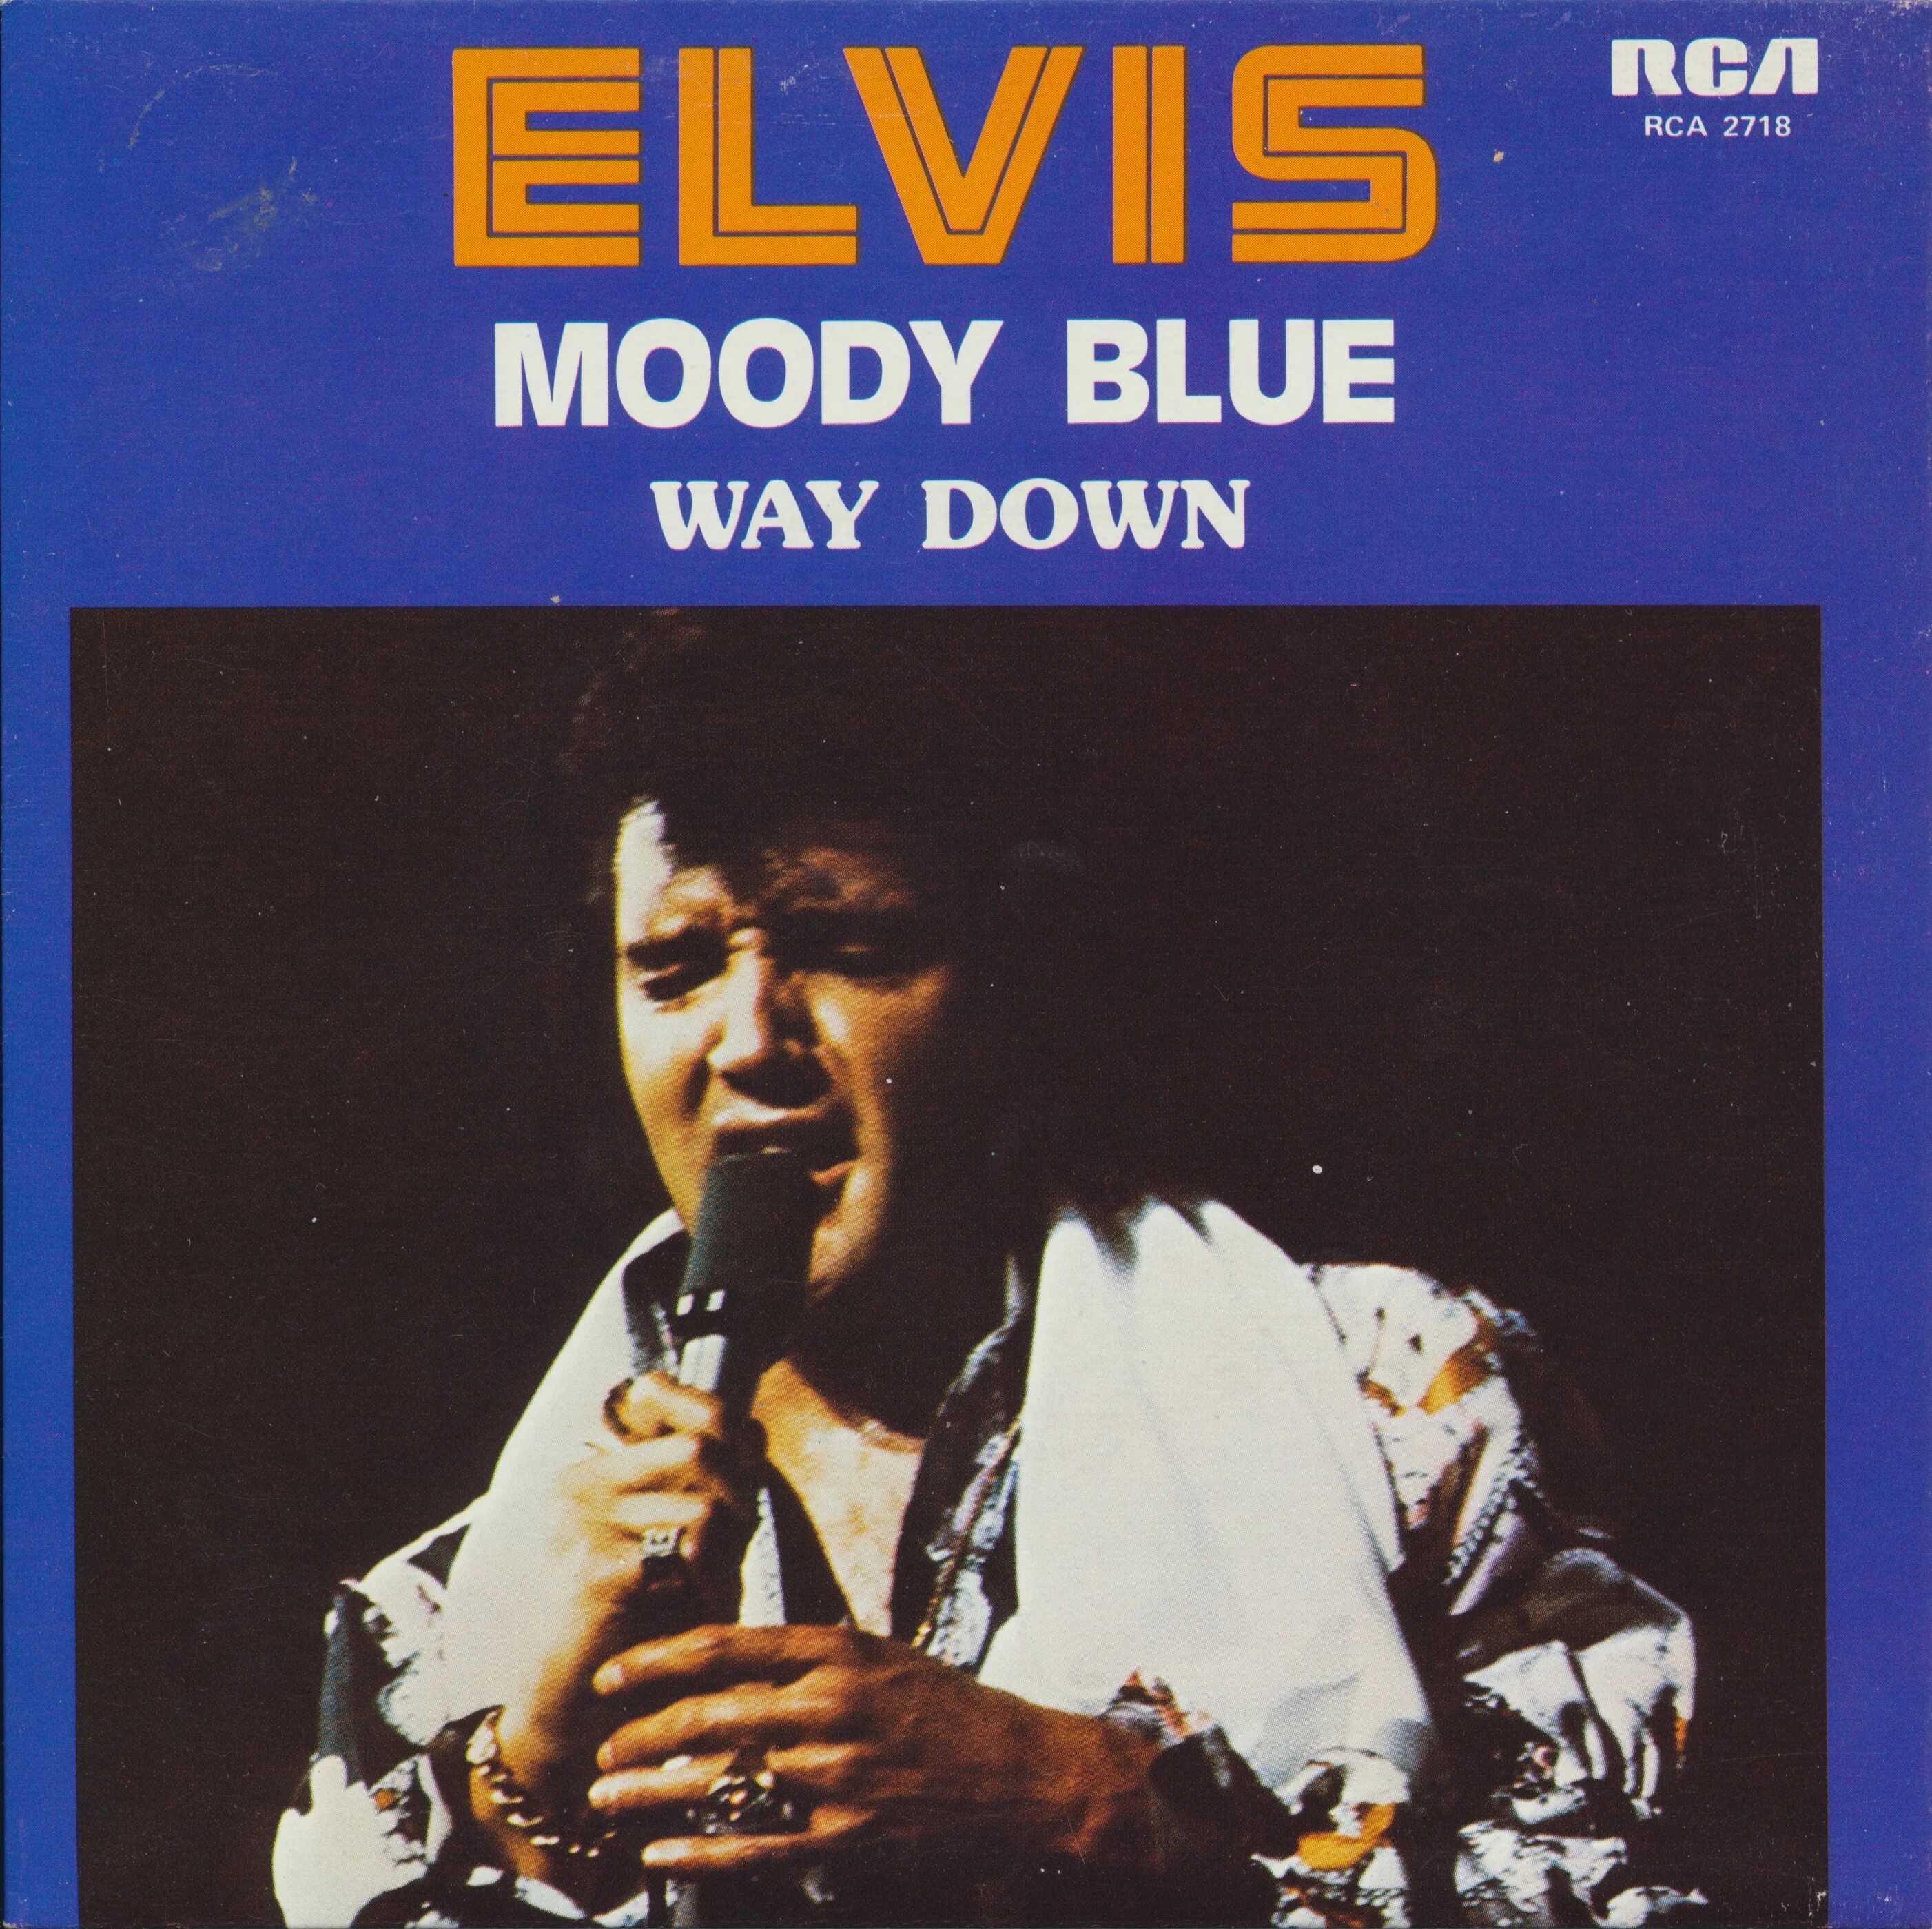 Way to blue. Moody Blue Elvis Presley. Moody Blue Элвис Пресли. Elvis Moody Blues. Элвис Пресли way down.